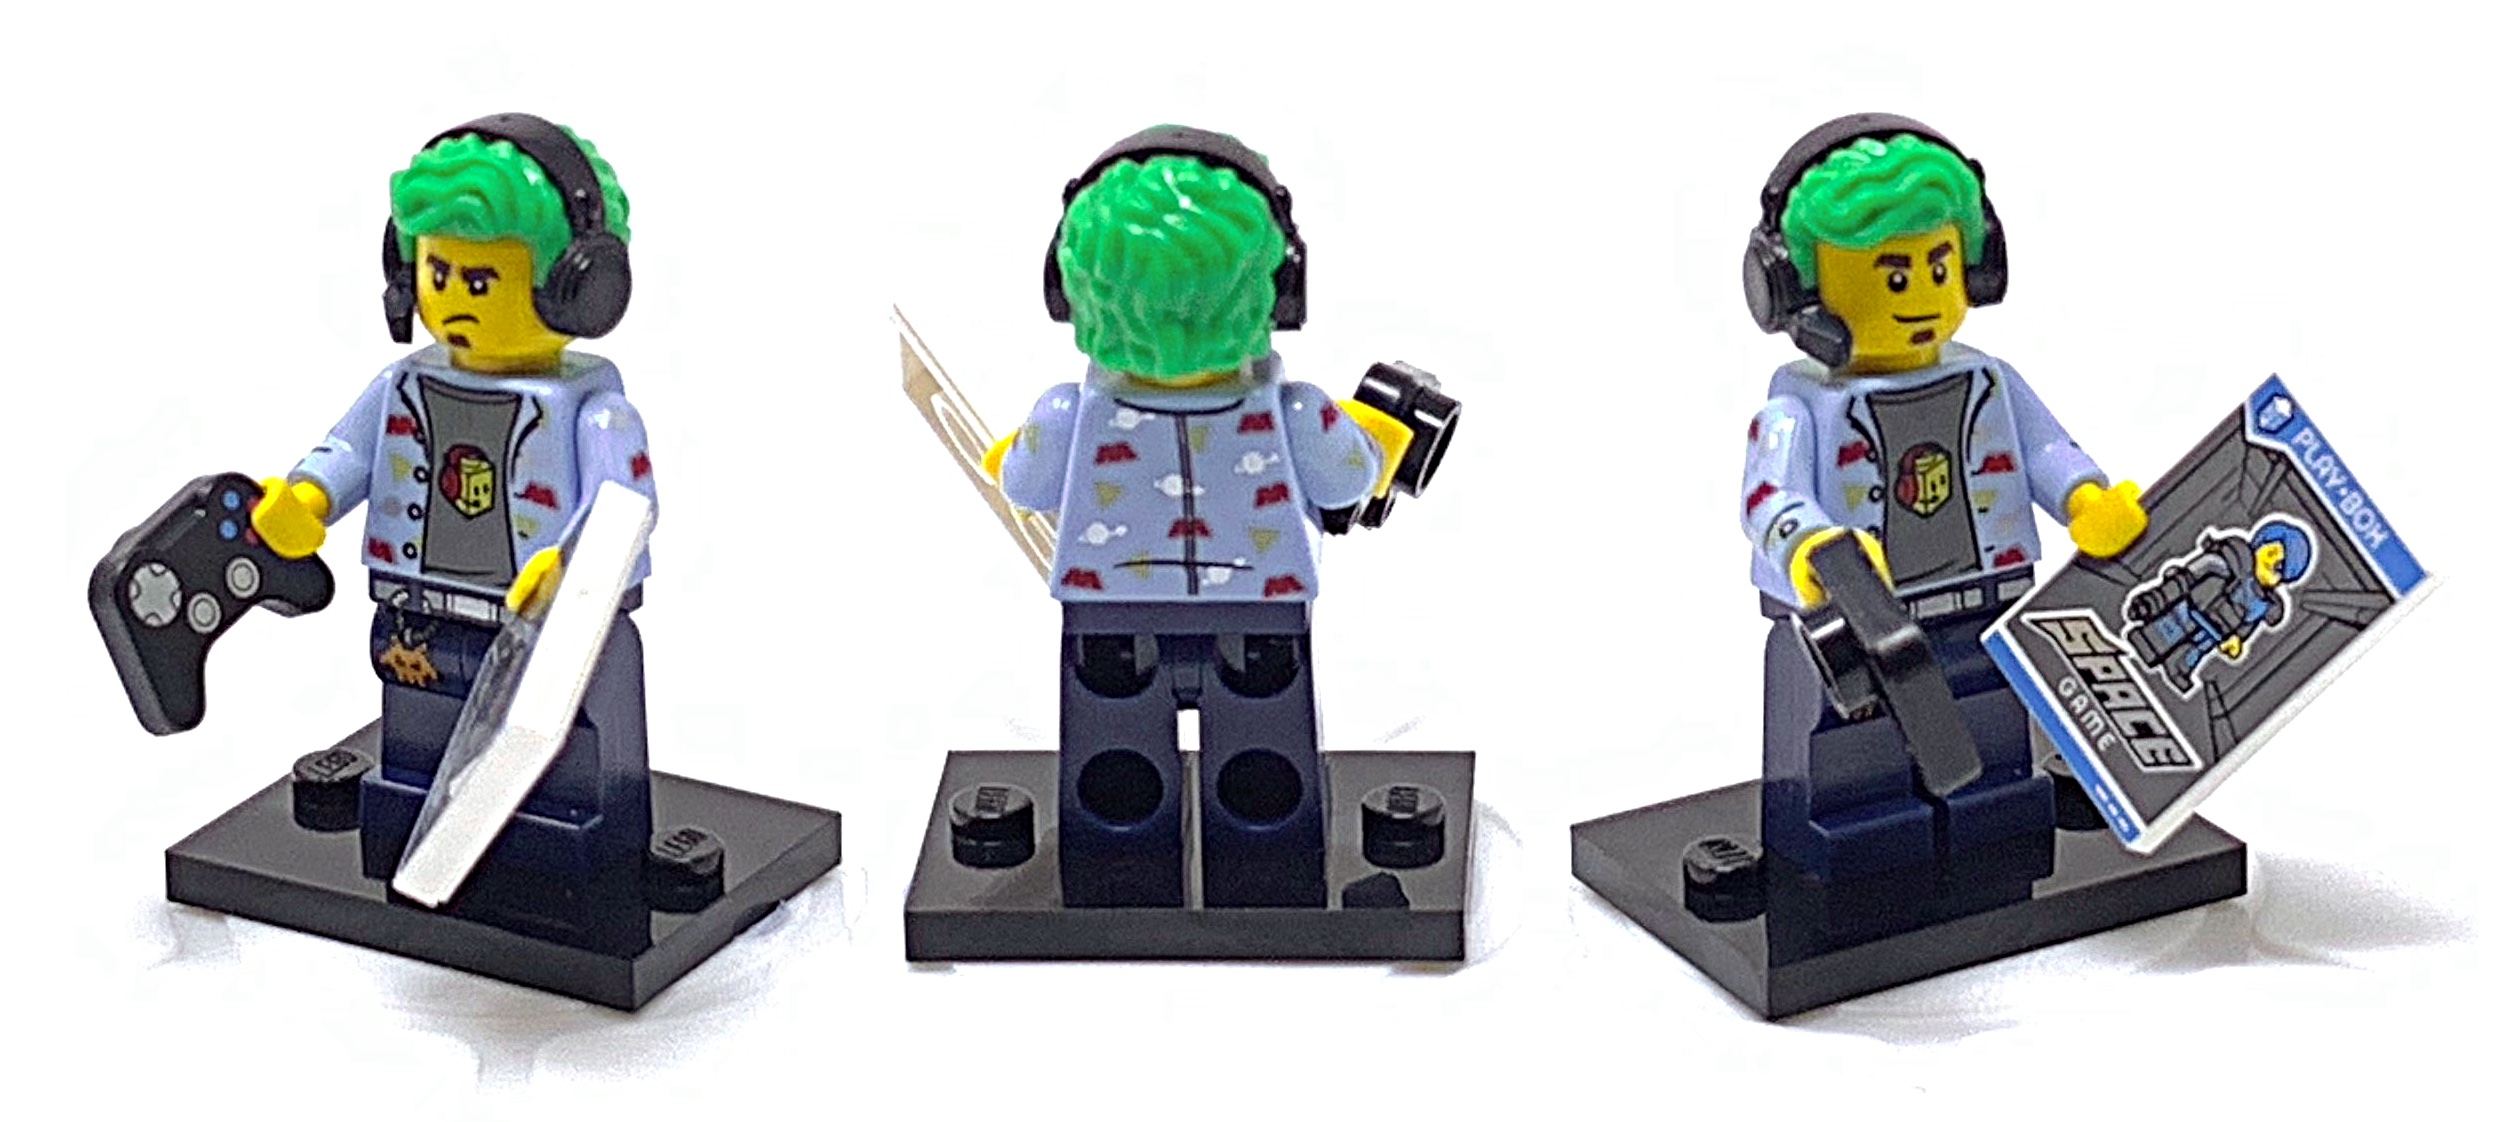 Custom Minifigures: Is it real LEGO? - Minifigures.com Blog